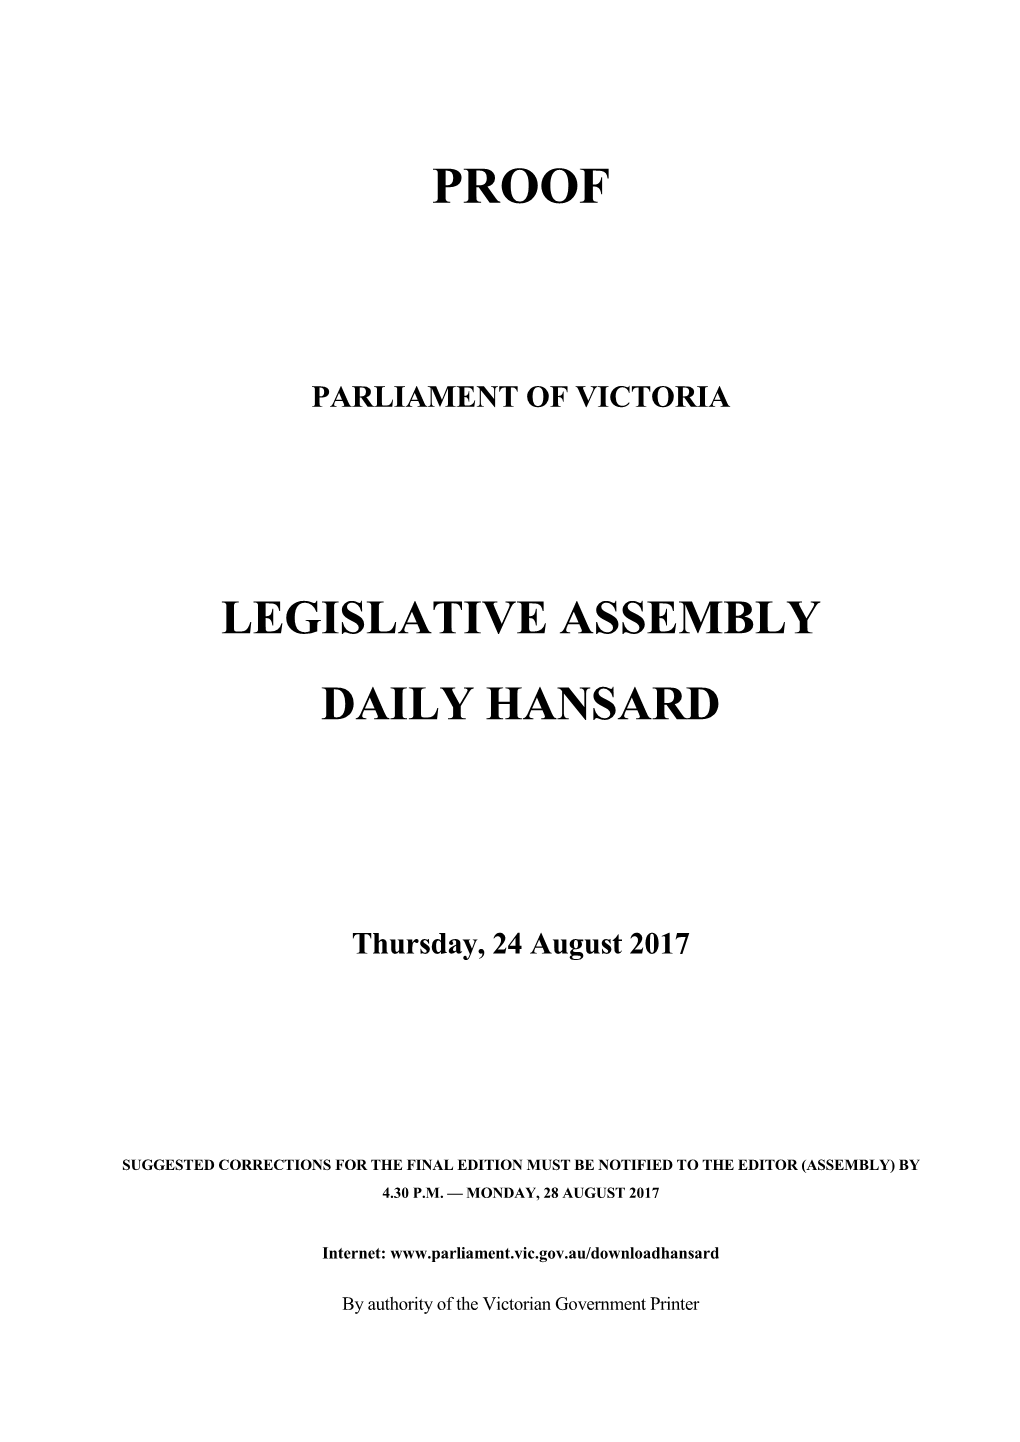 Legislative Assembly Daily Hansard